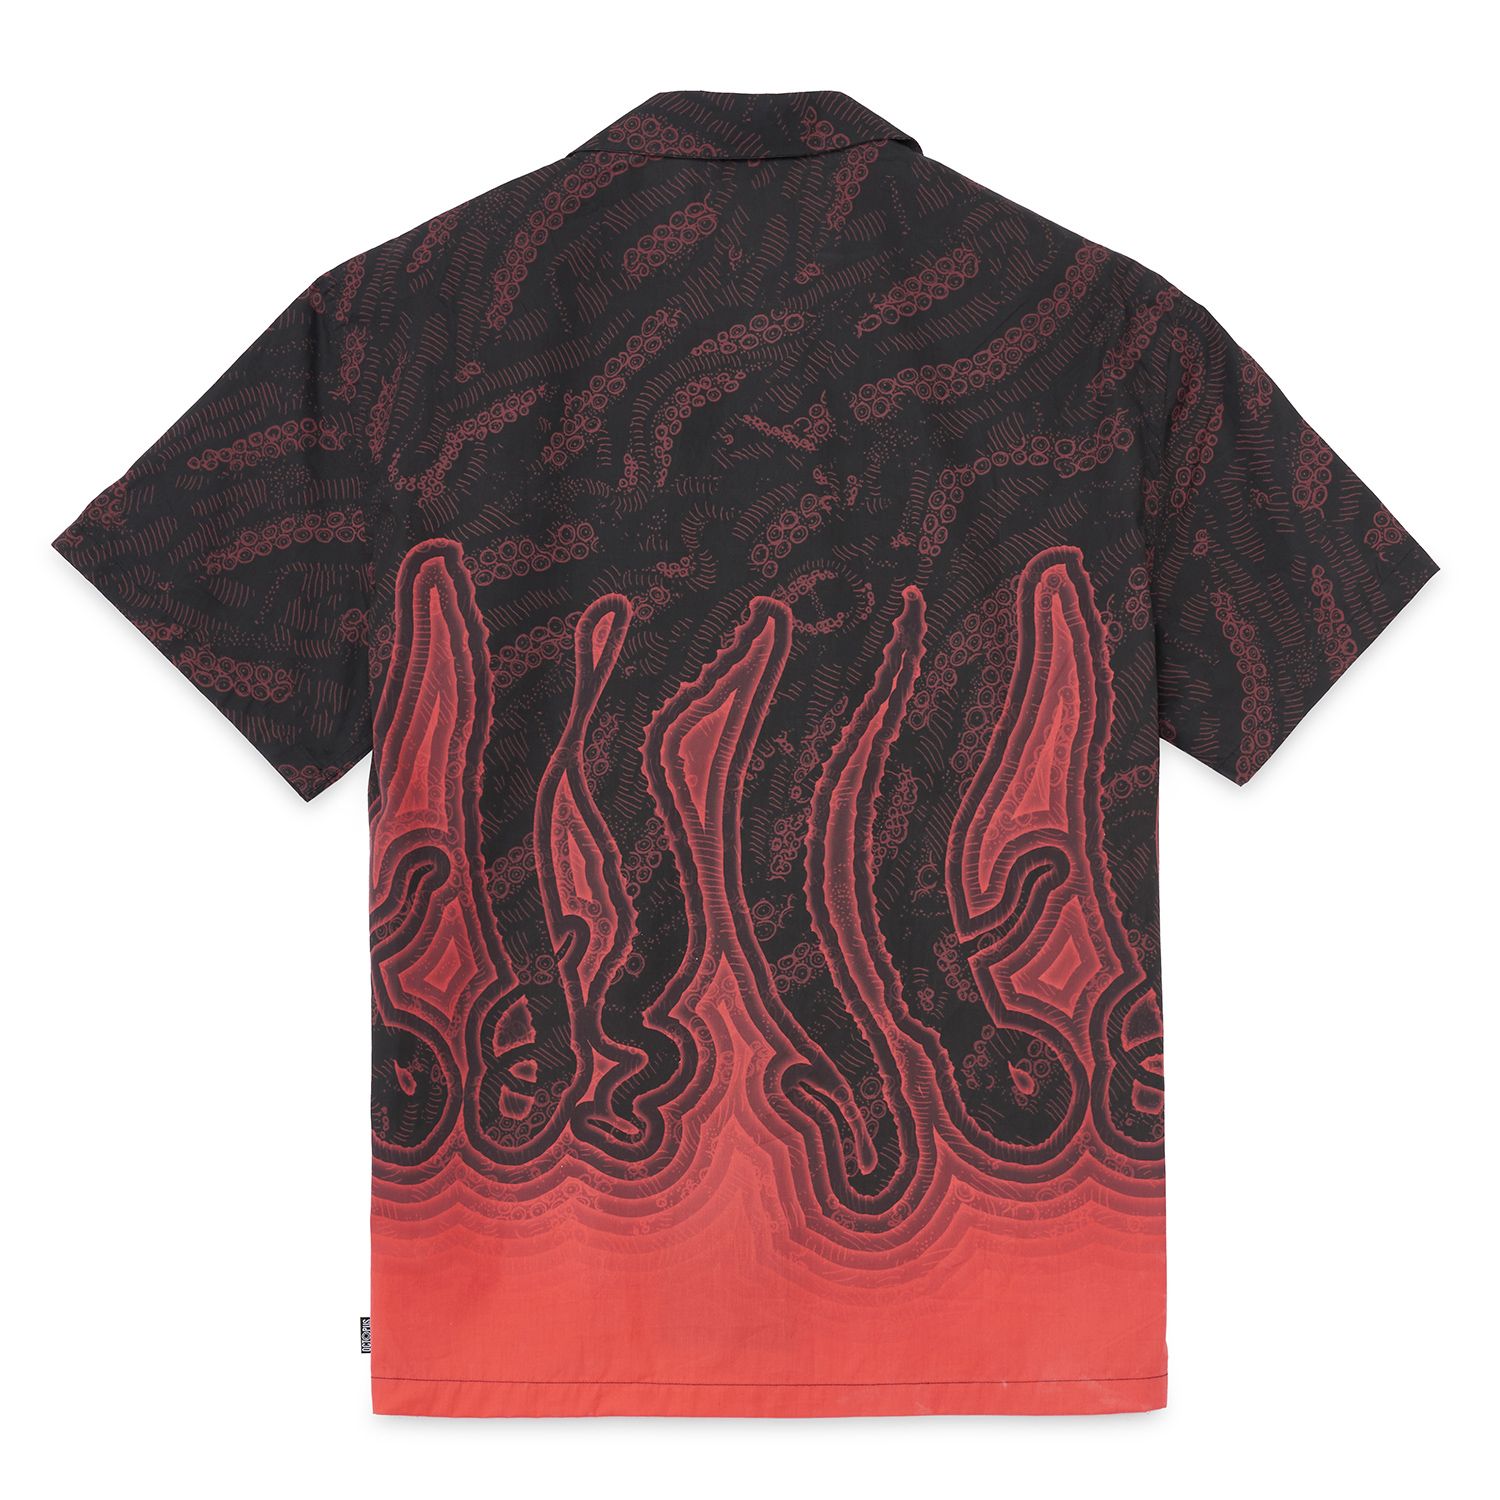 Octopus Abyss Shirt Tentacles Black Man Shirt